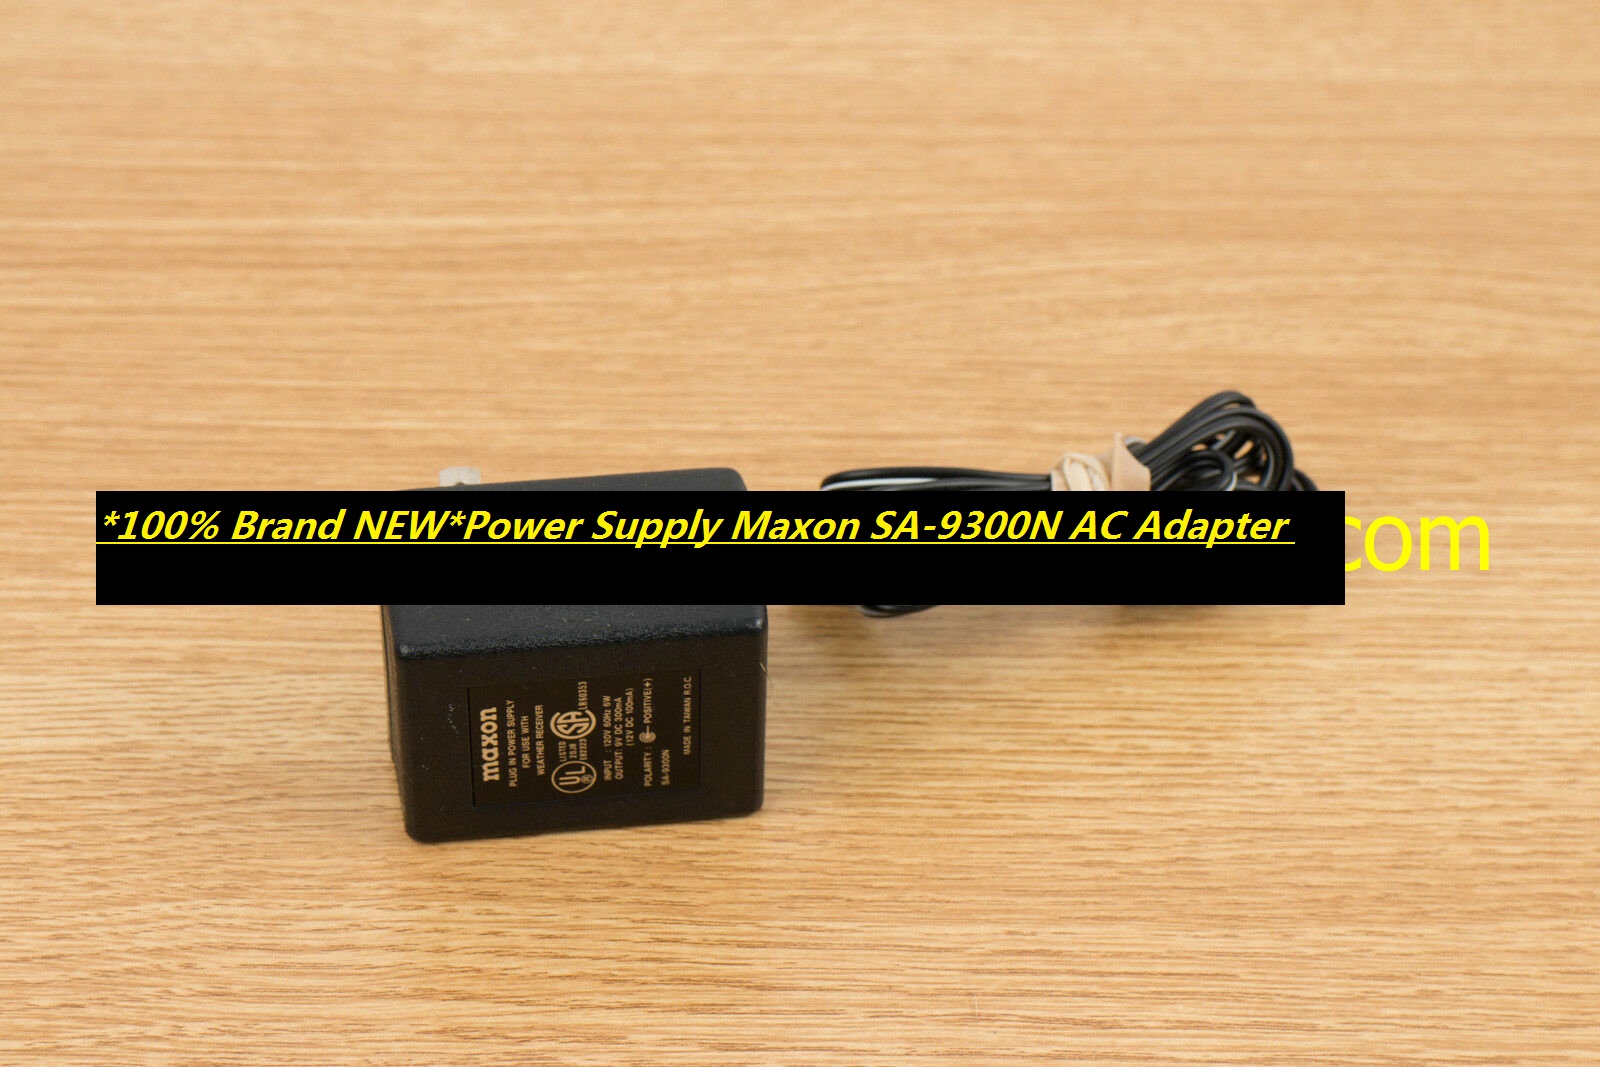 *100% Brand NEW*Power Supply Maxon SA-9300N AC Adapter